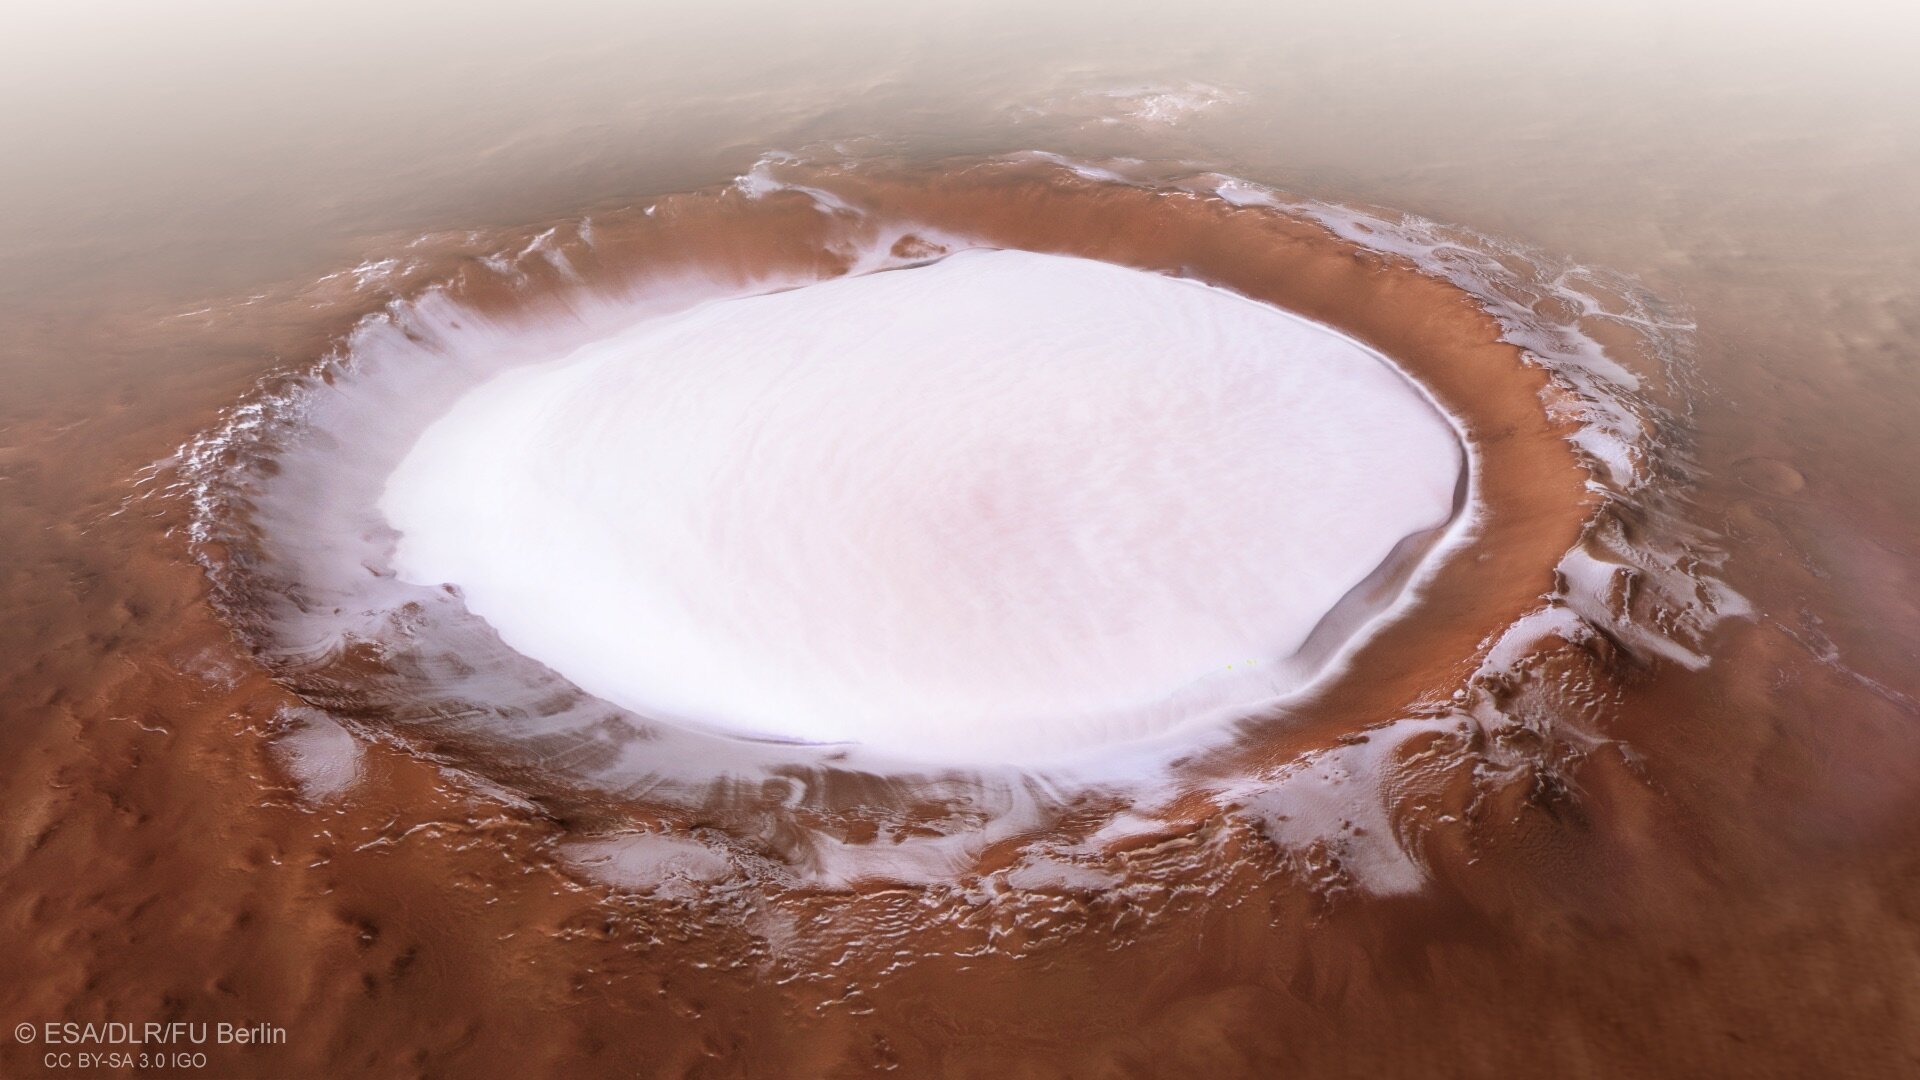 Mars Express gets festive: A winter wonderland on Mars